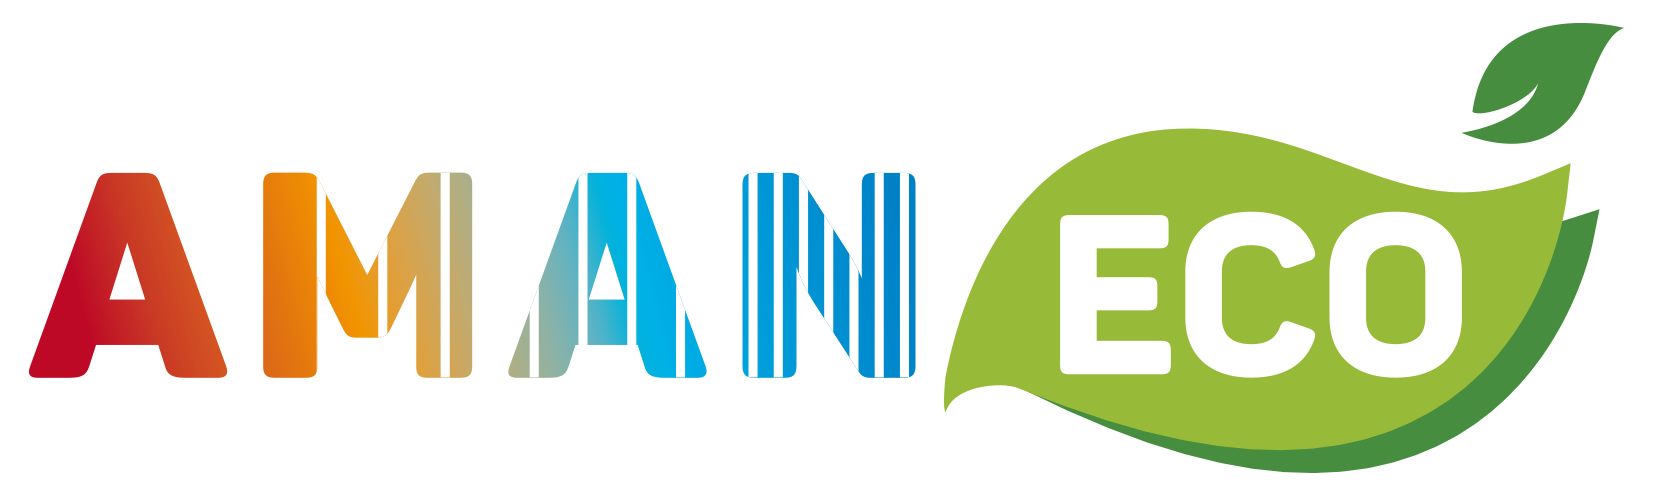 AMANECO logo